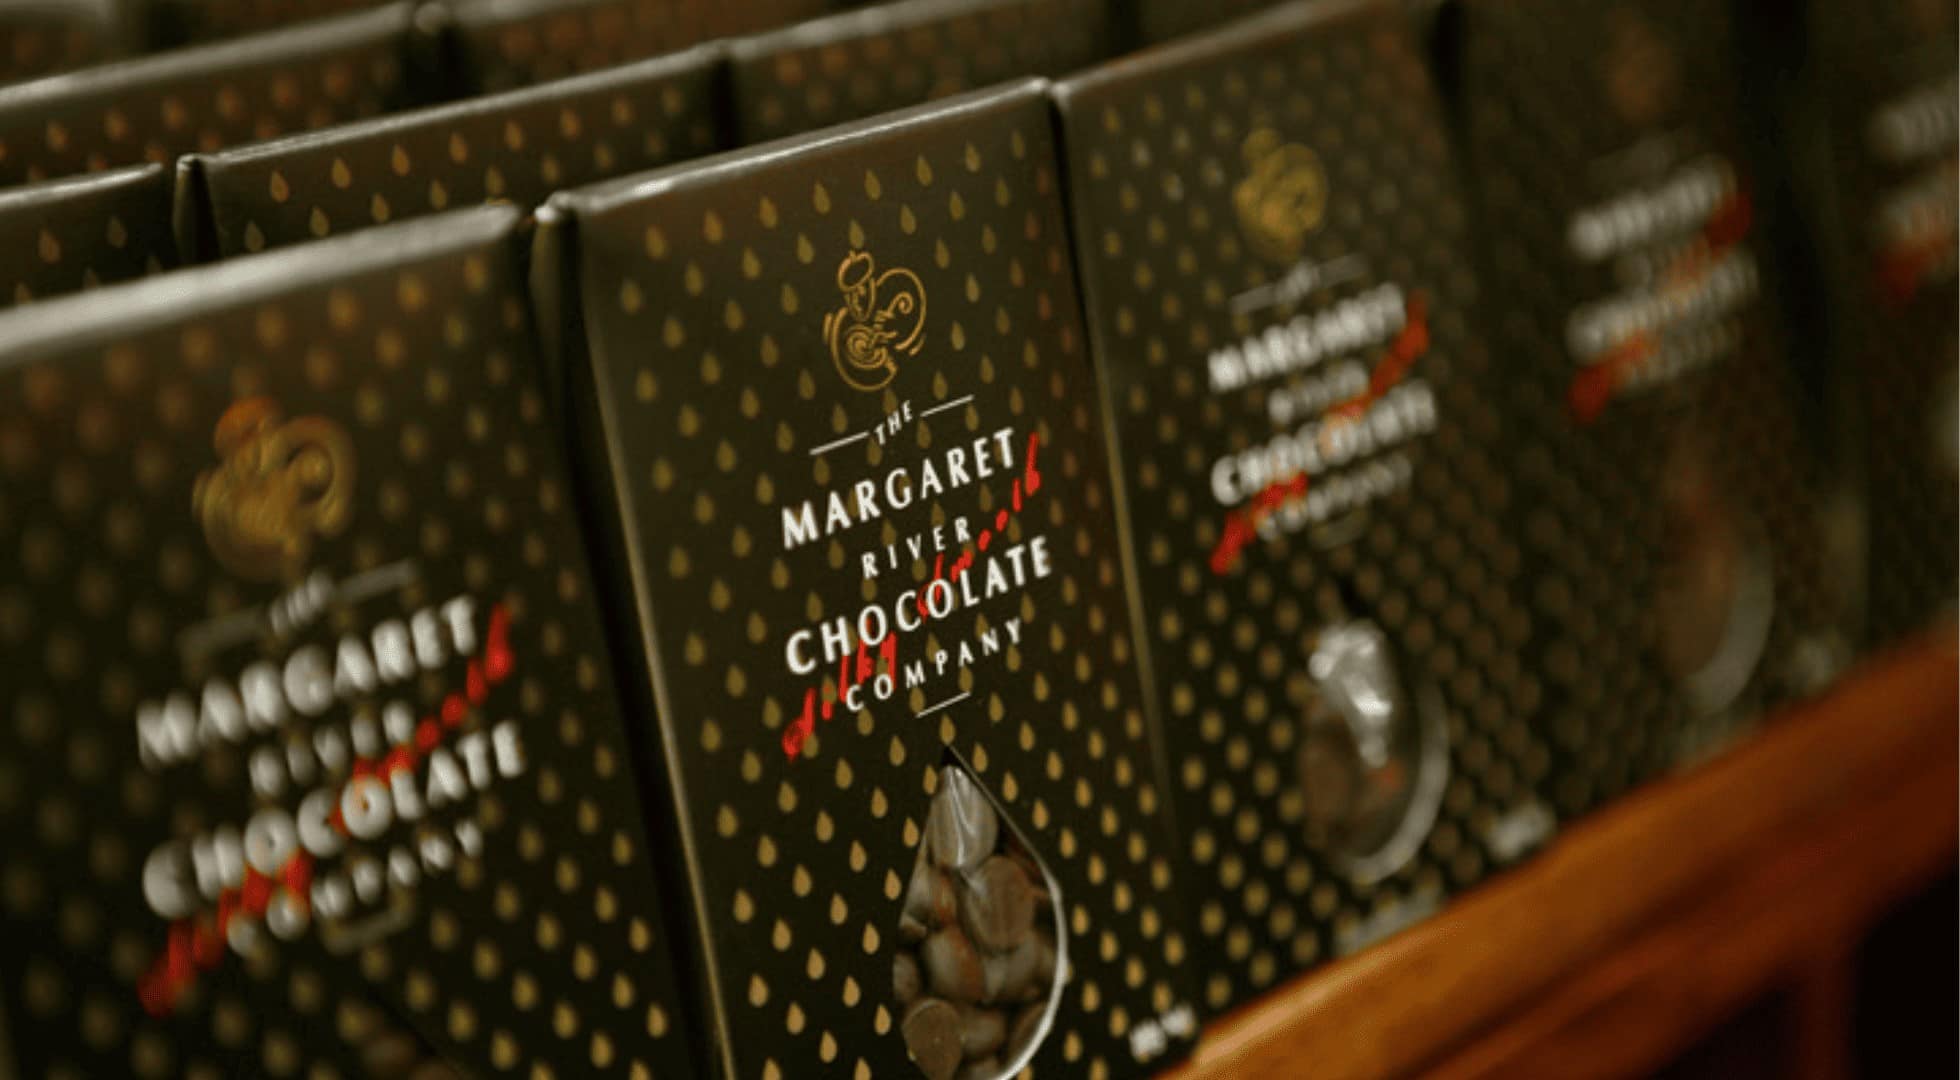 western australia holiday - margaret river chocolate company